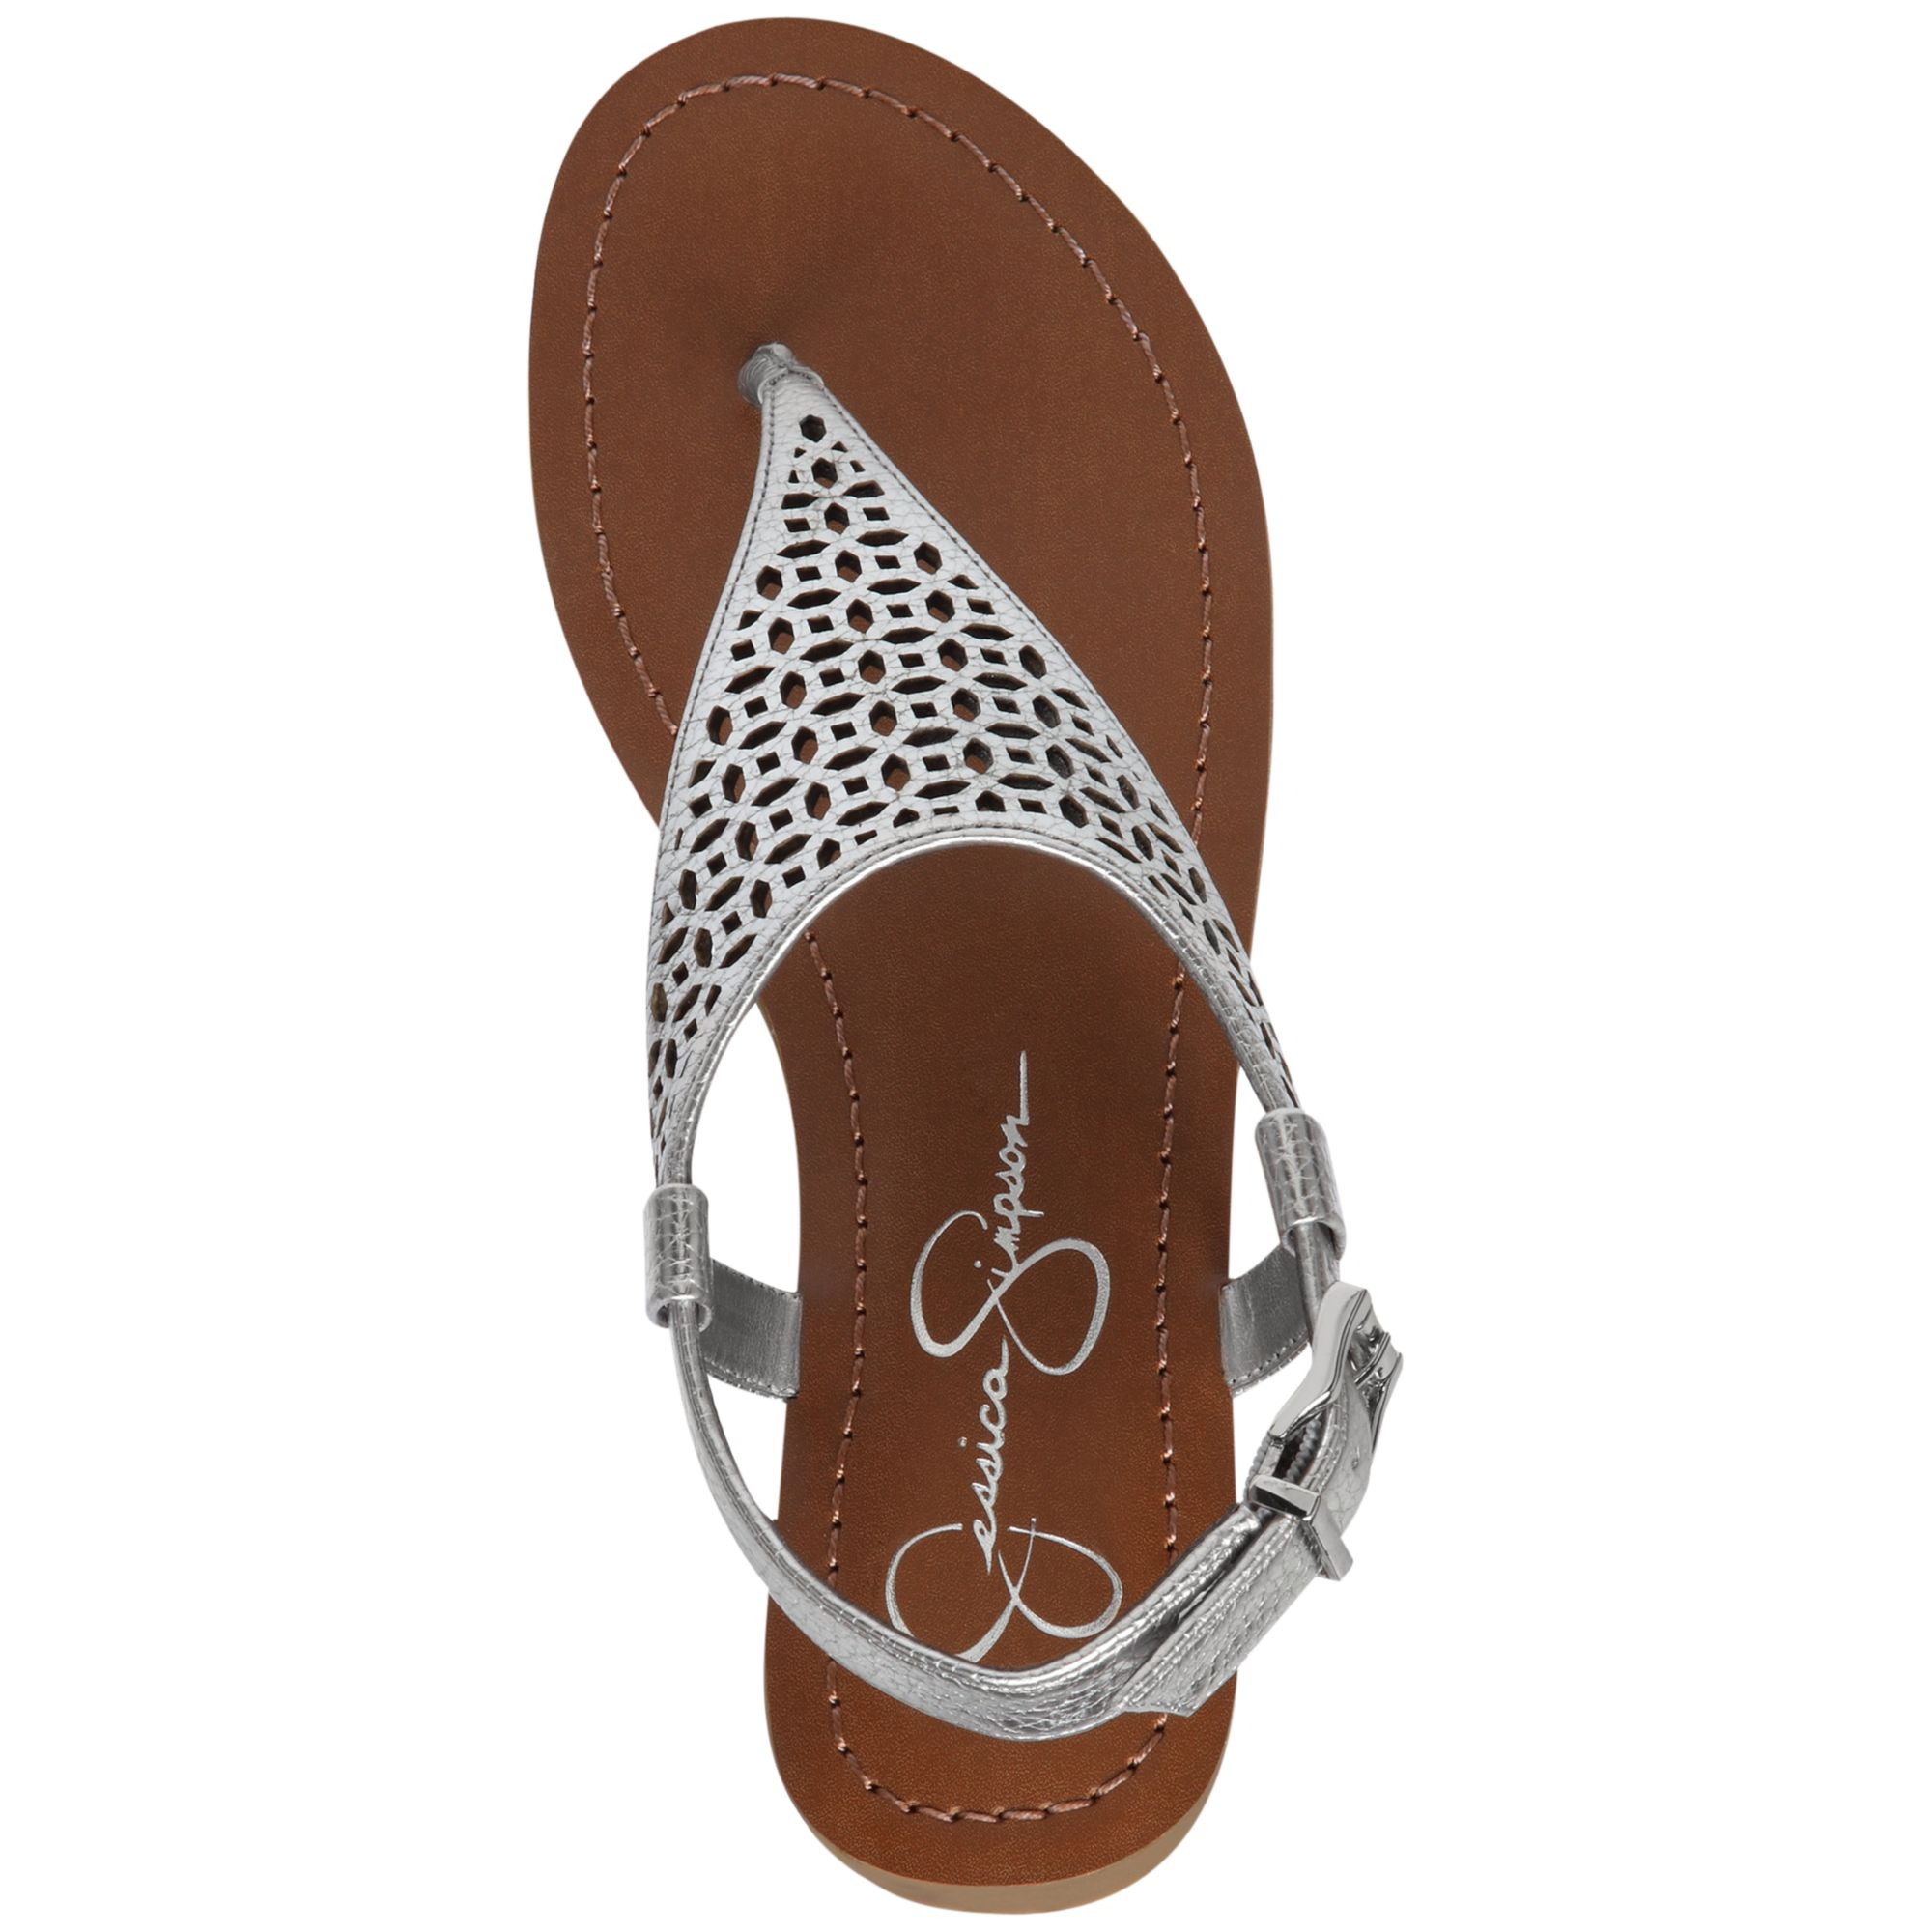 Jessica Simpson Grile Flat Thong Sandals in Silver Metallic (Metallic) |  Lyst